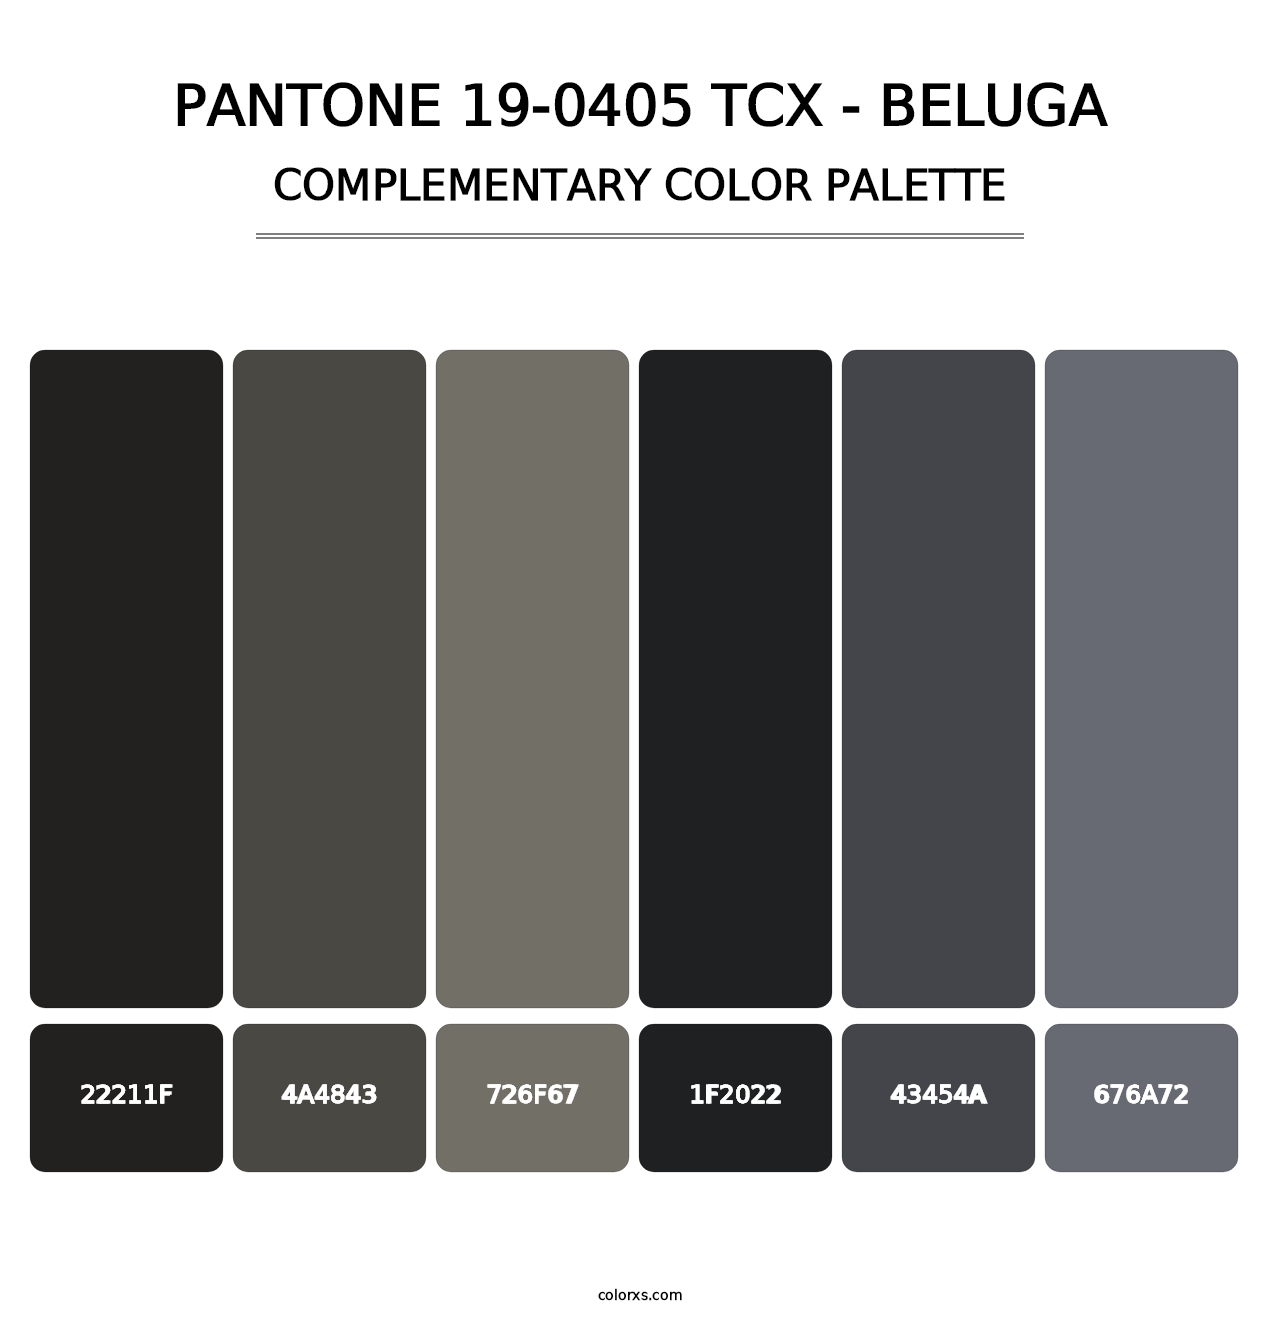 PANTONE 19-0405 TCX - Beluga - Complementary Color Palette